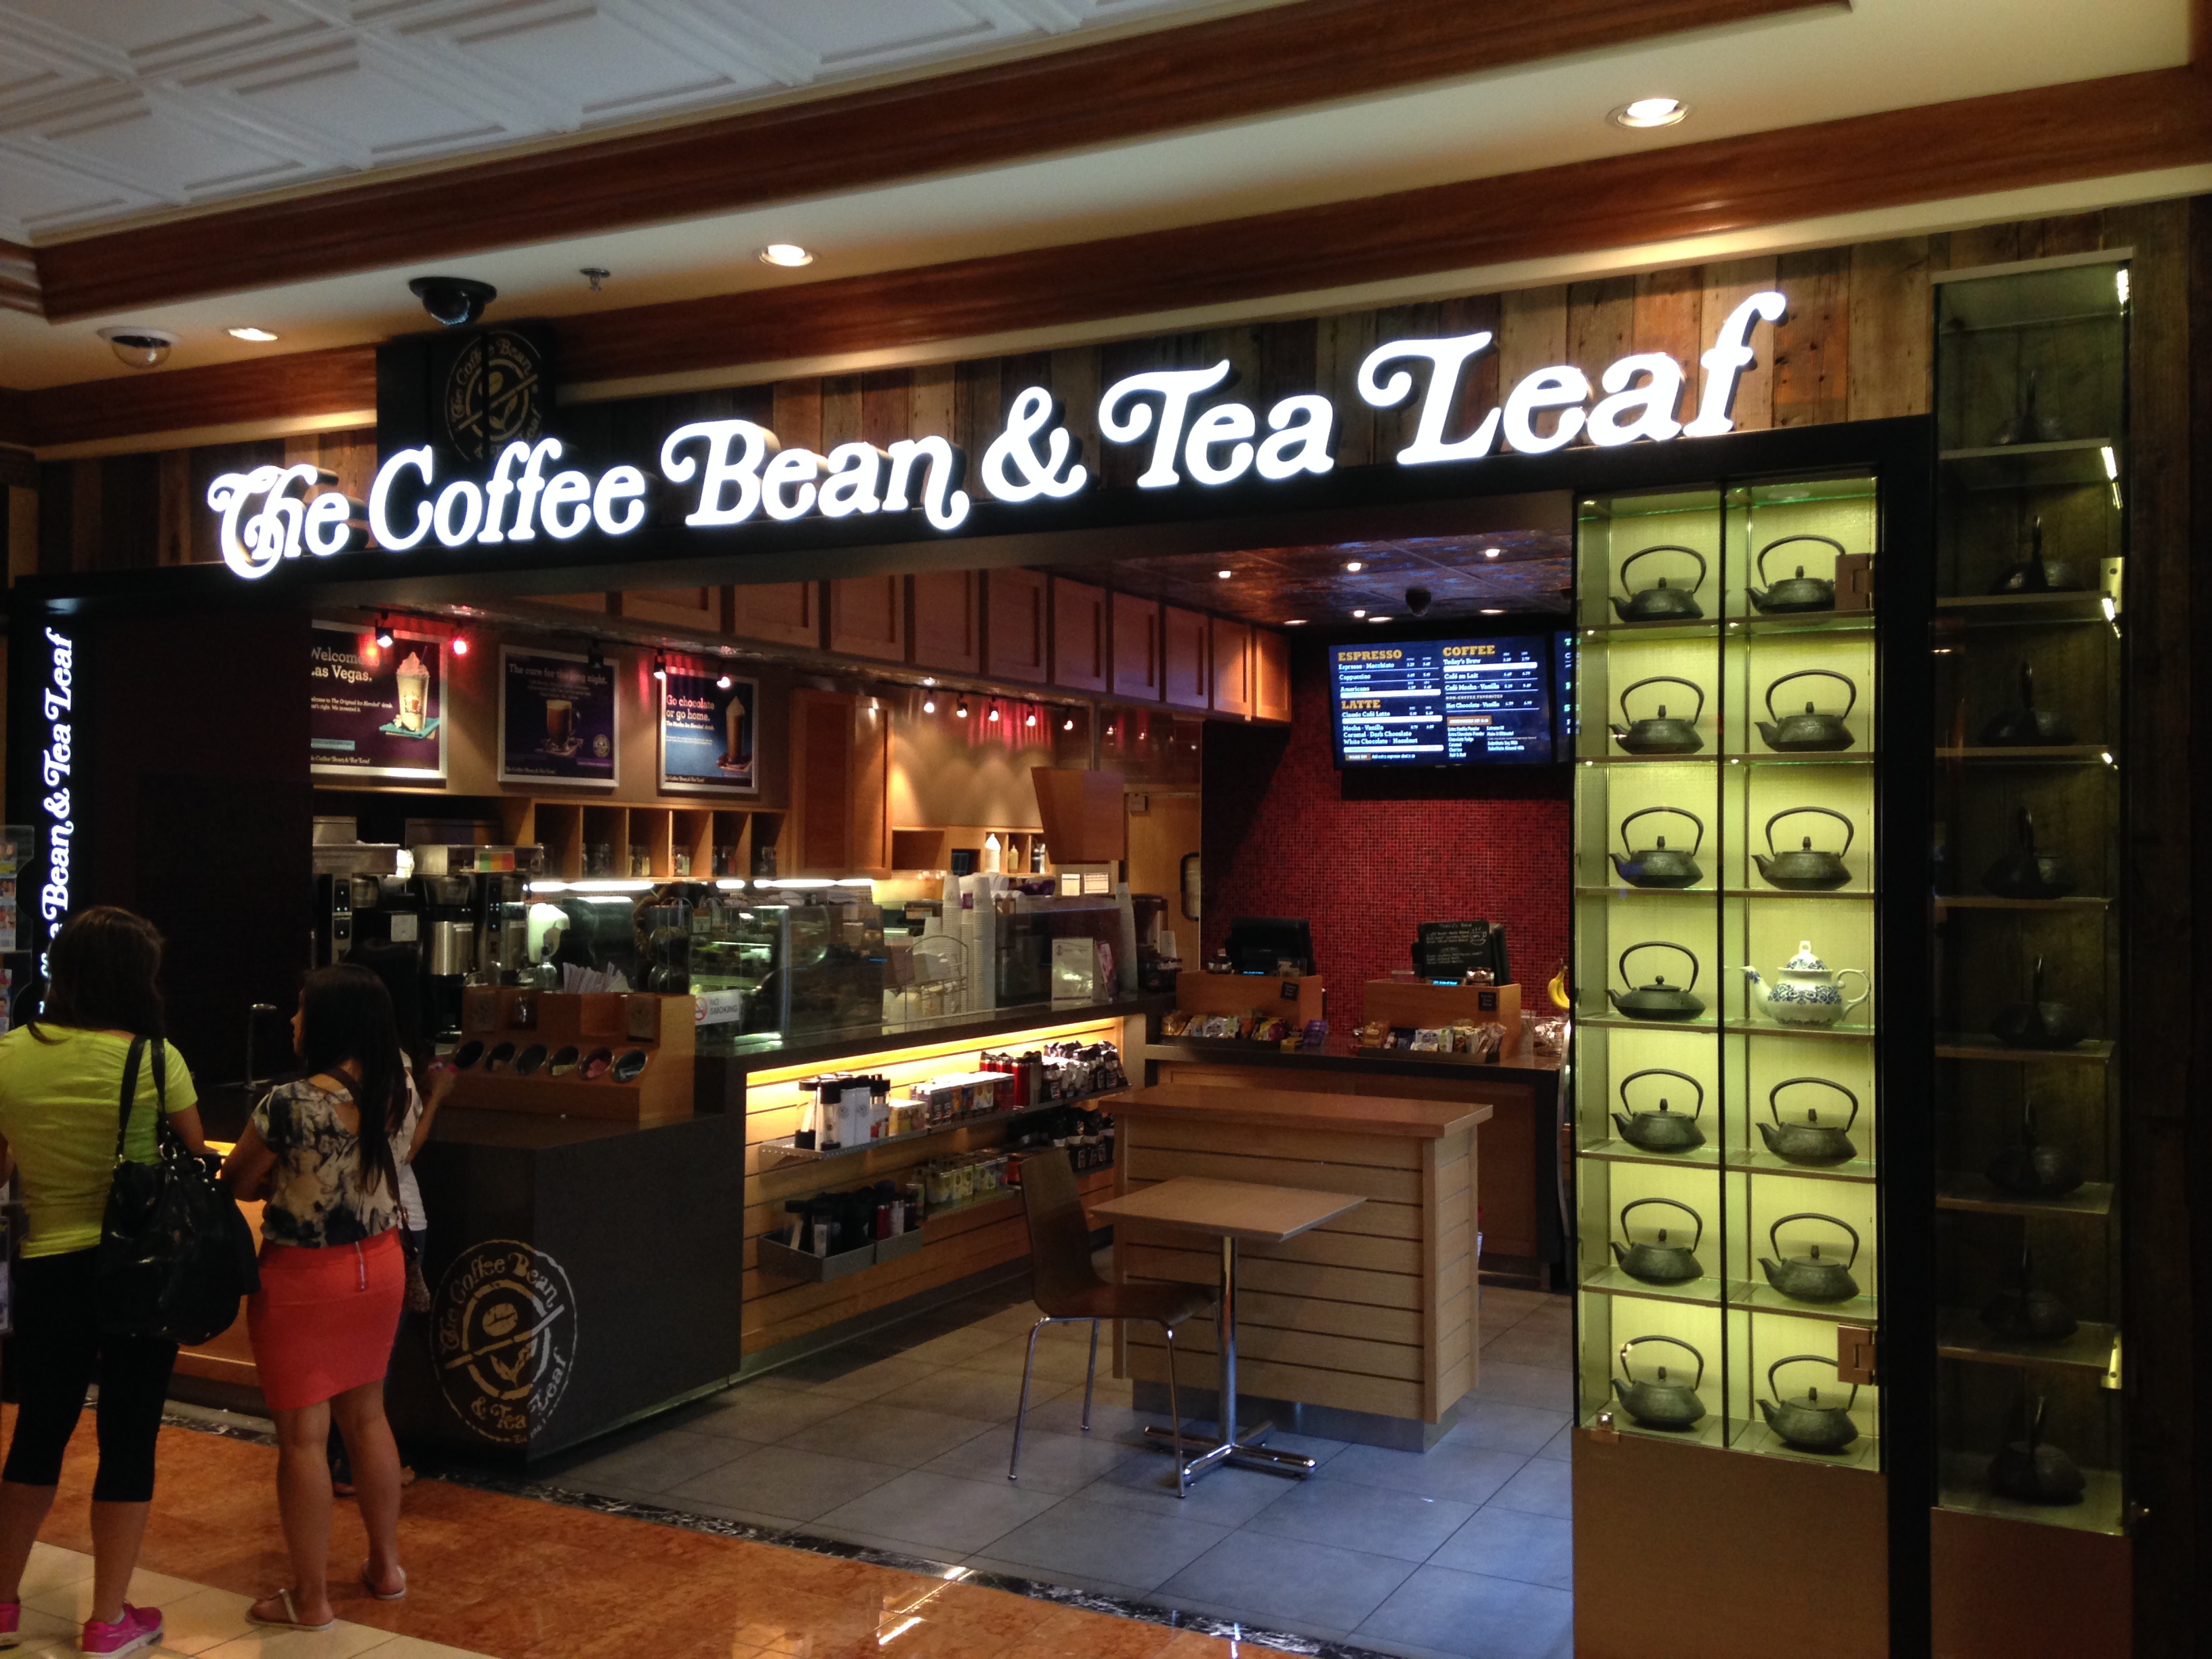 4 Kosher Coffee Bean & Tea Leaf Locations on/near the Las Vegas Strip